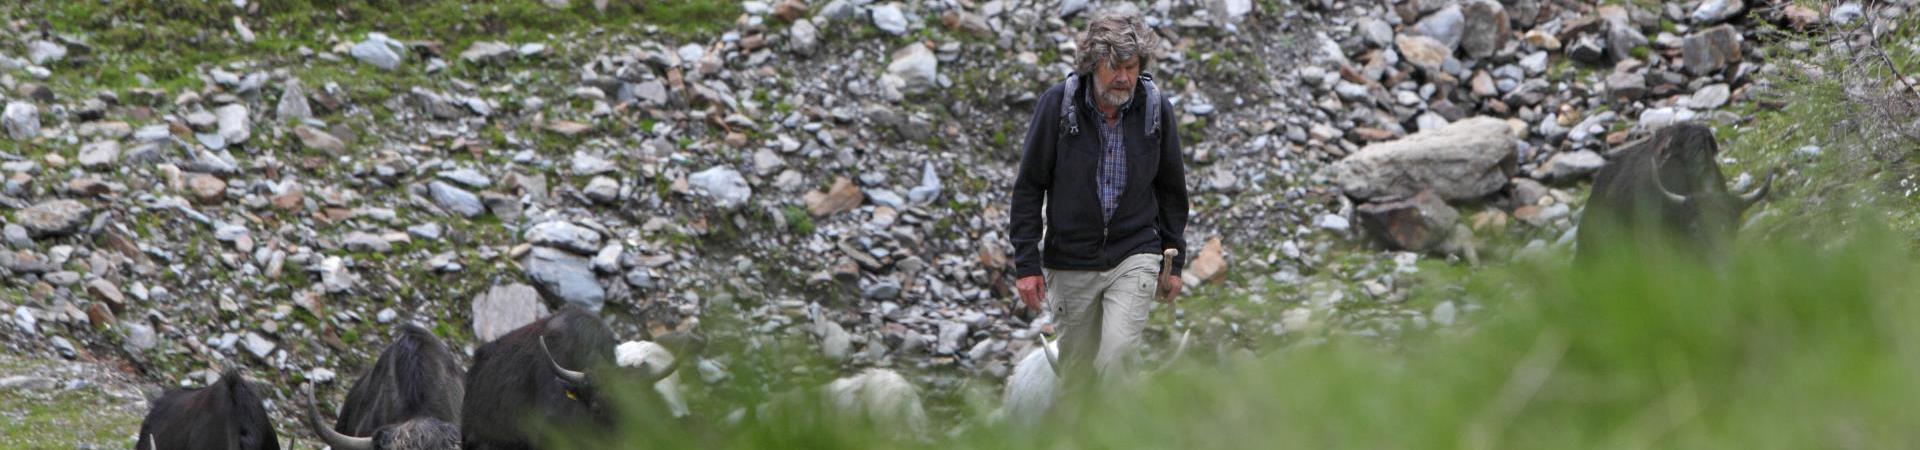 Reinhold Messner & his yaks